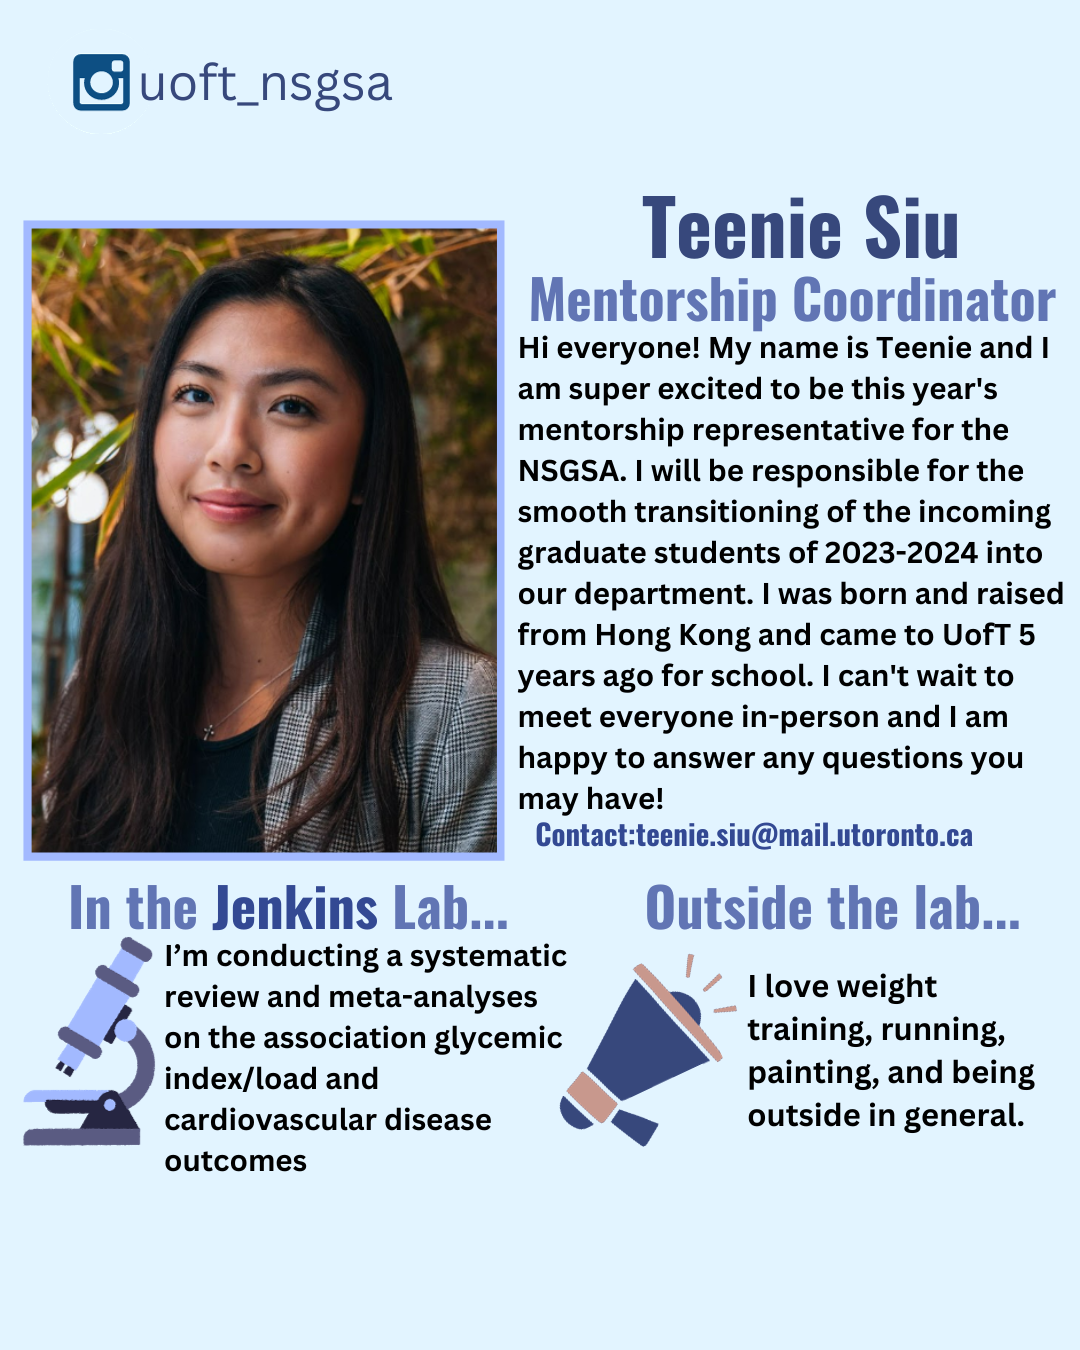 Teenie Siu, Mentorship Coordinator